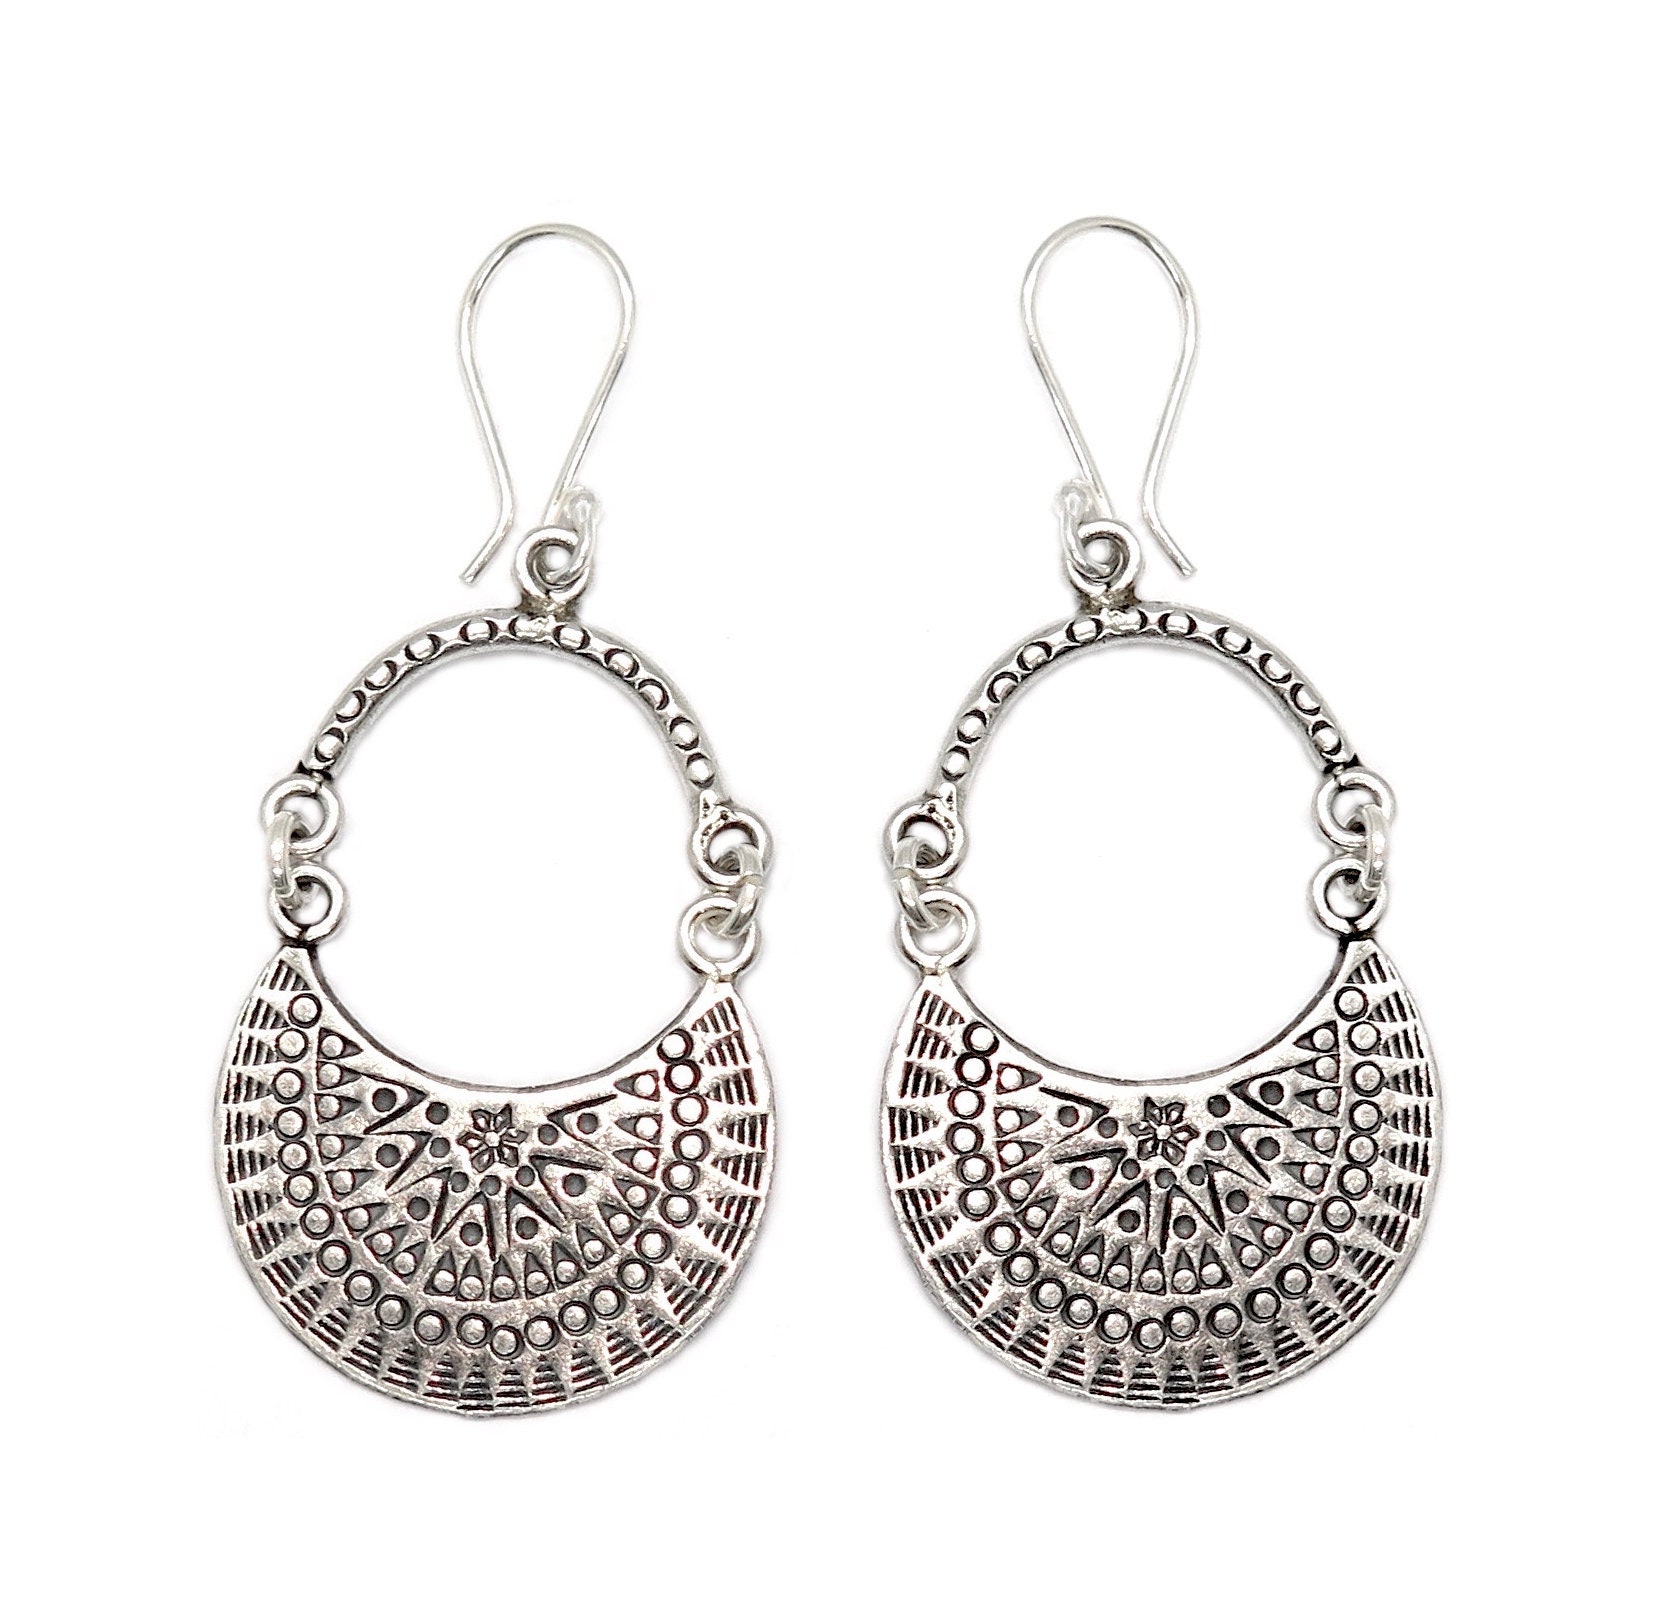 Balinese genuine 925 sterling silver BOHO earrings | eBay